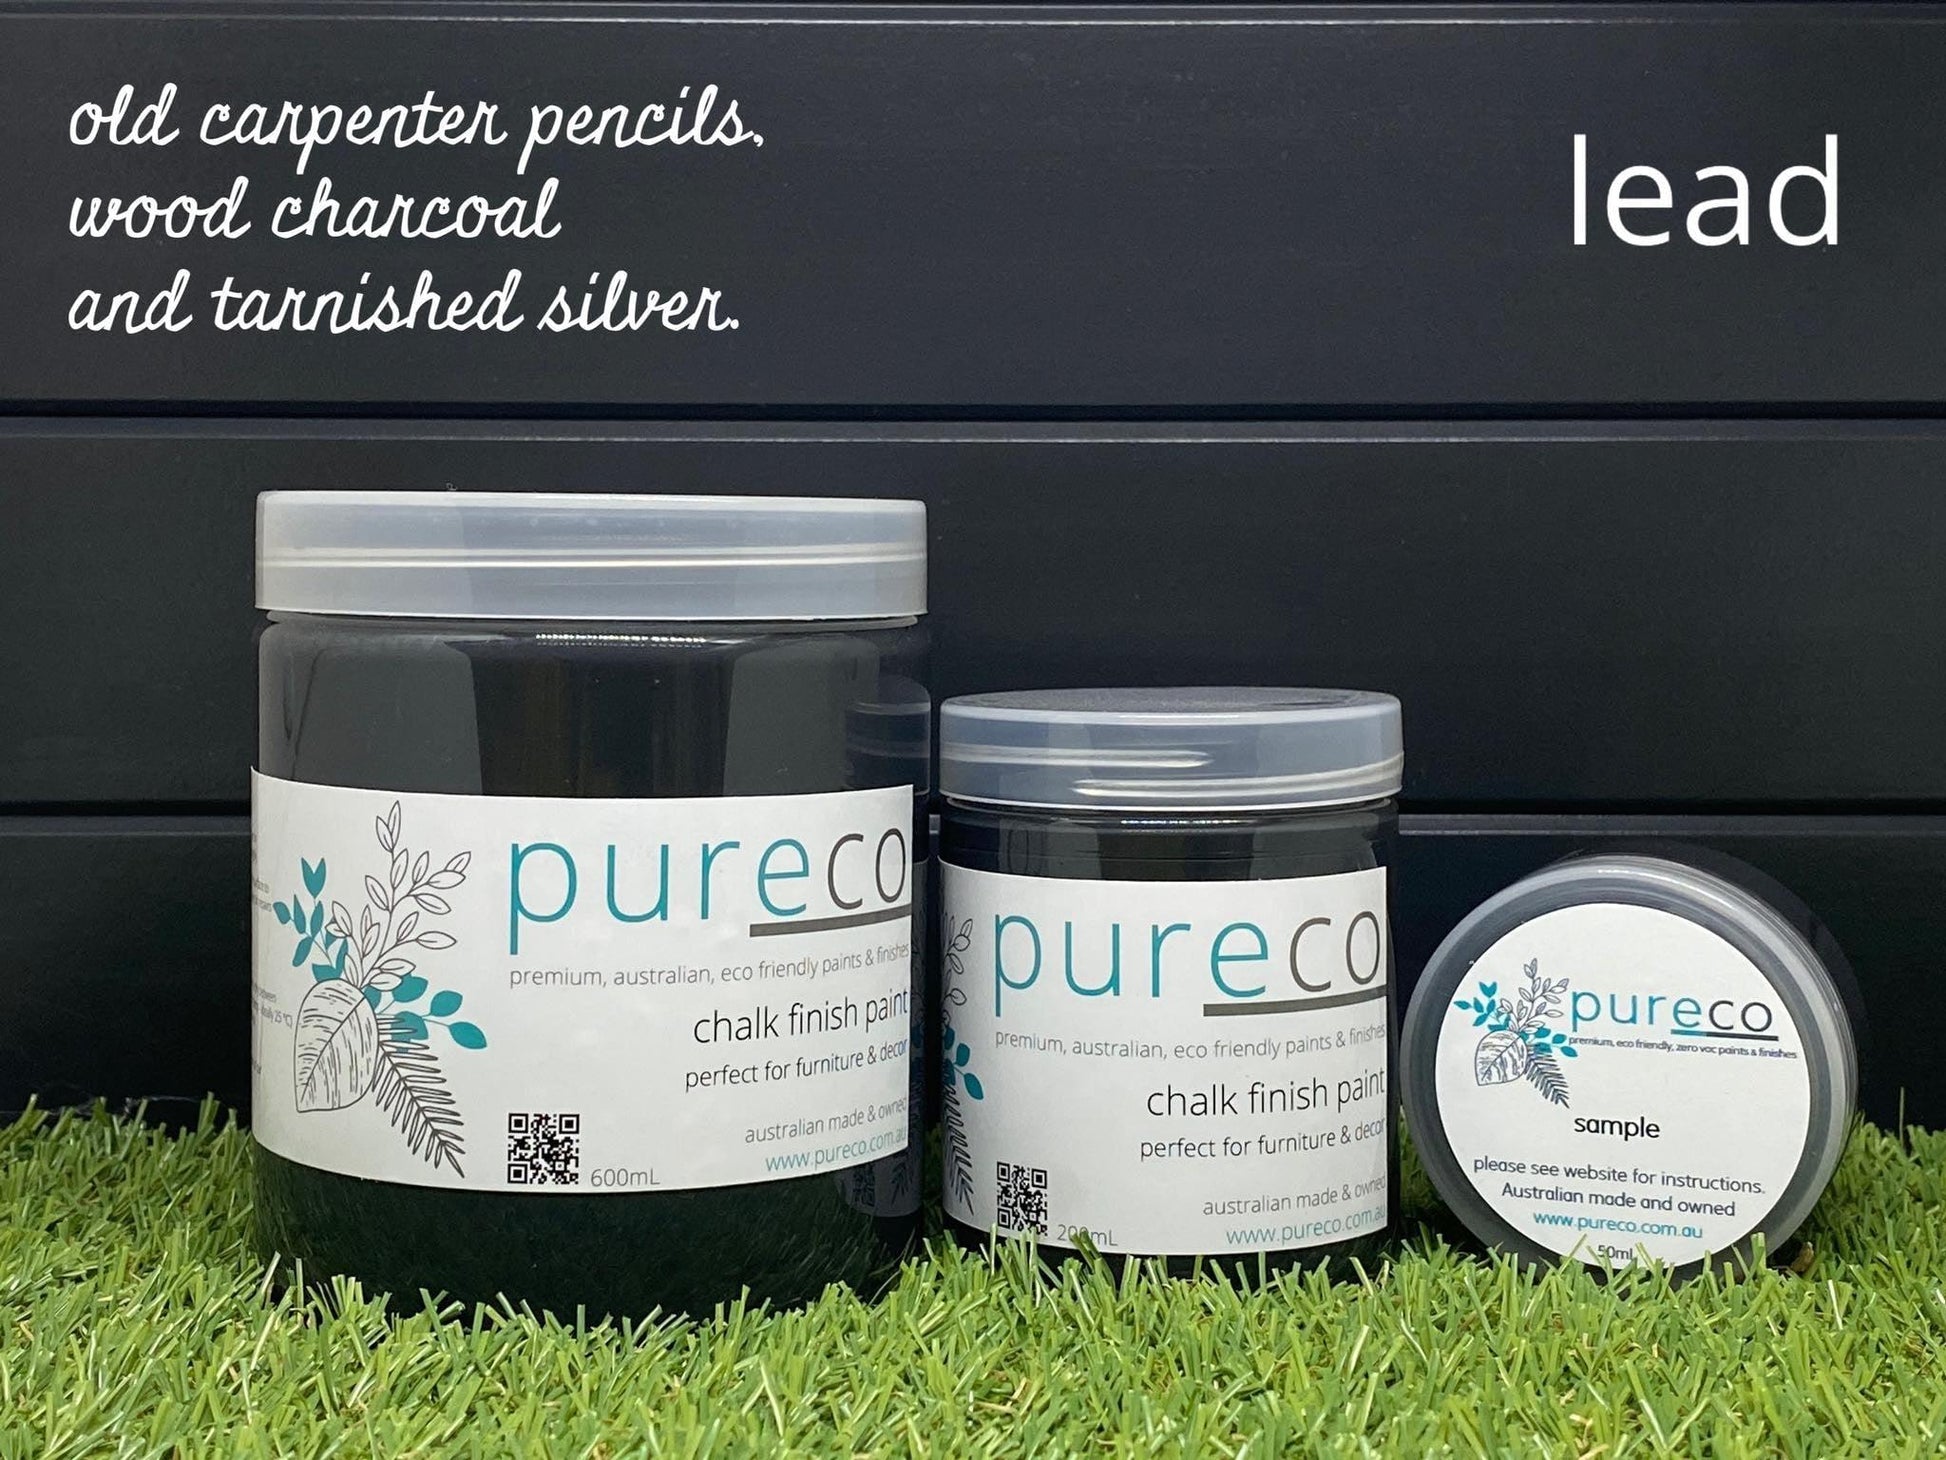 Pureco Chalk Paint Lead